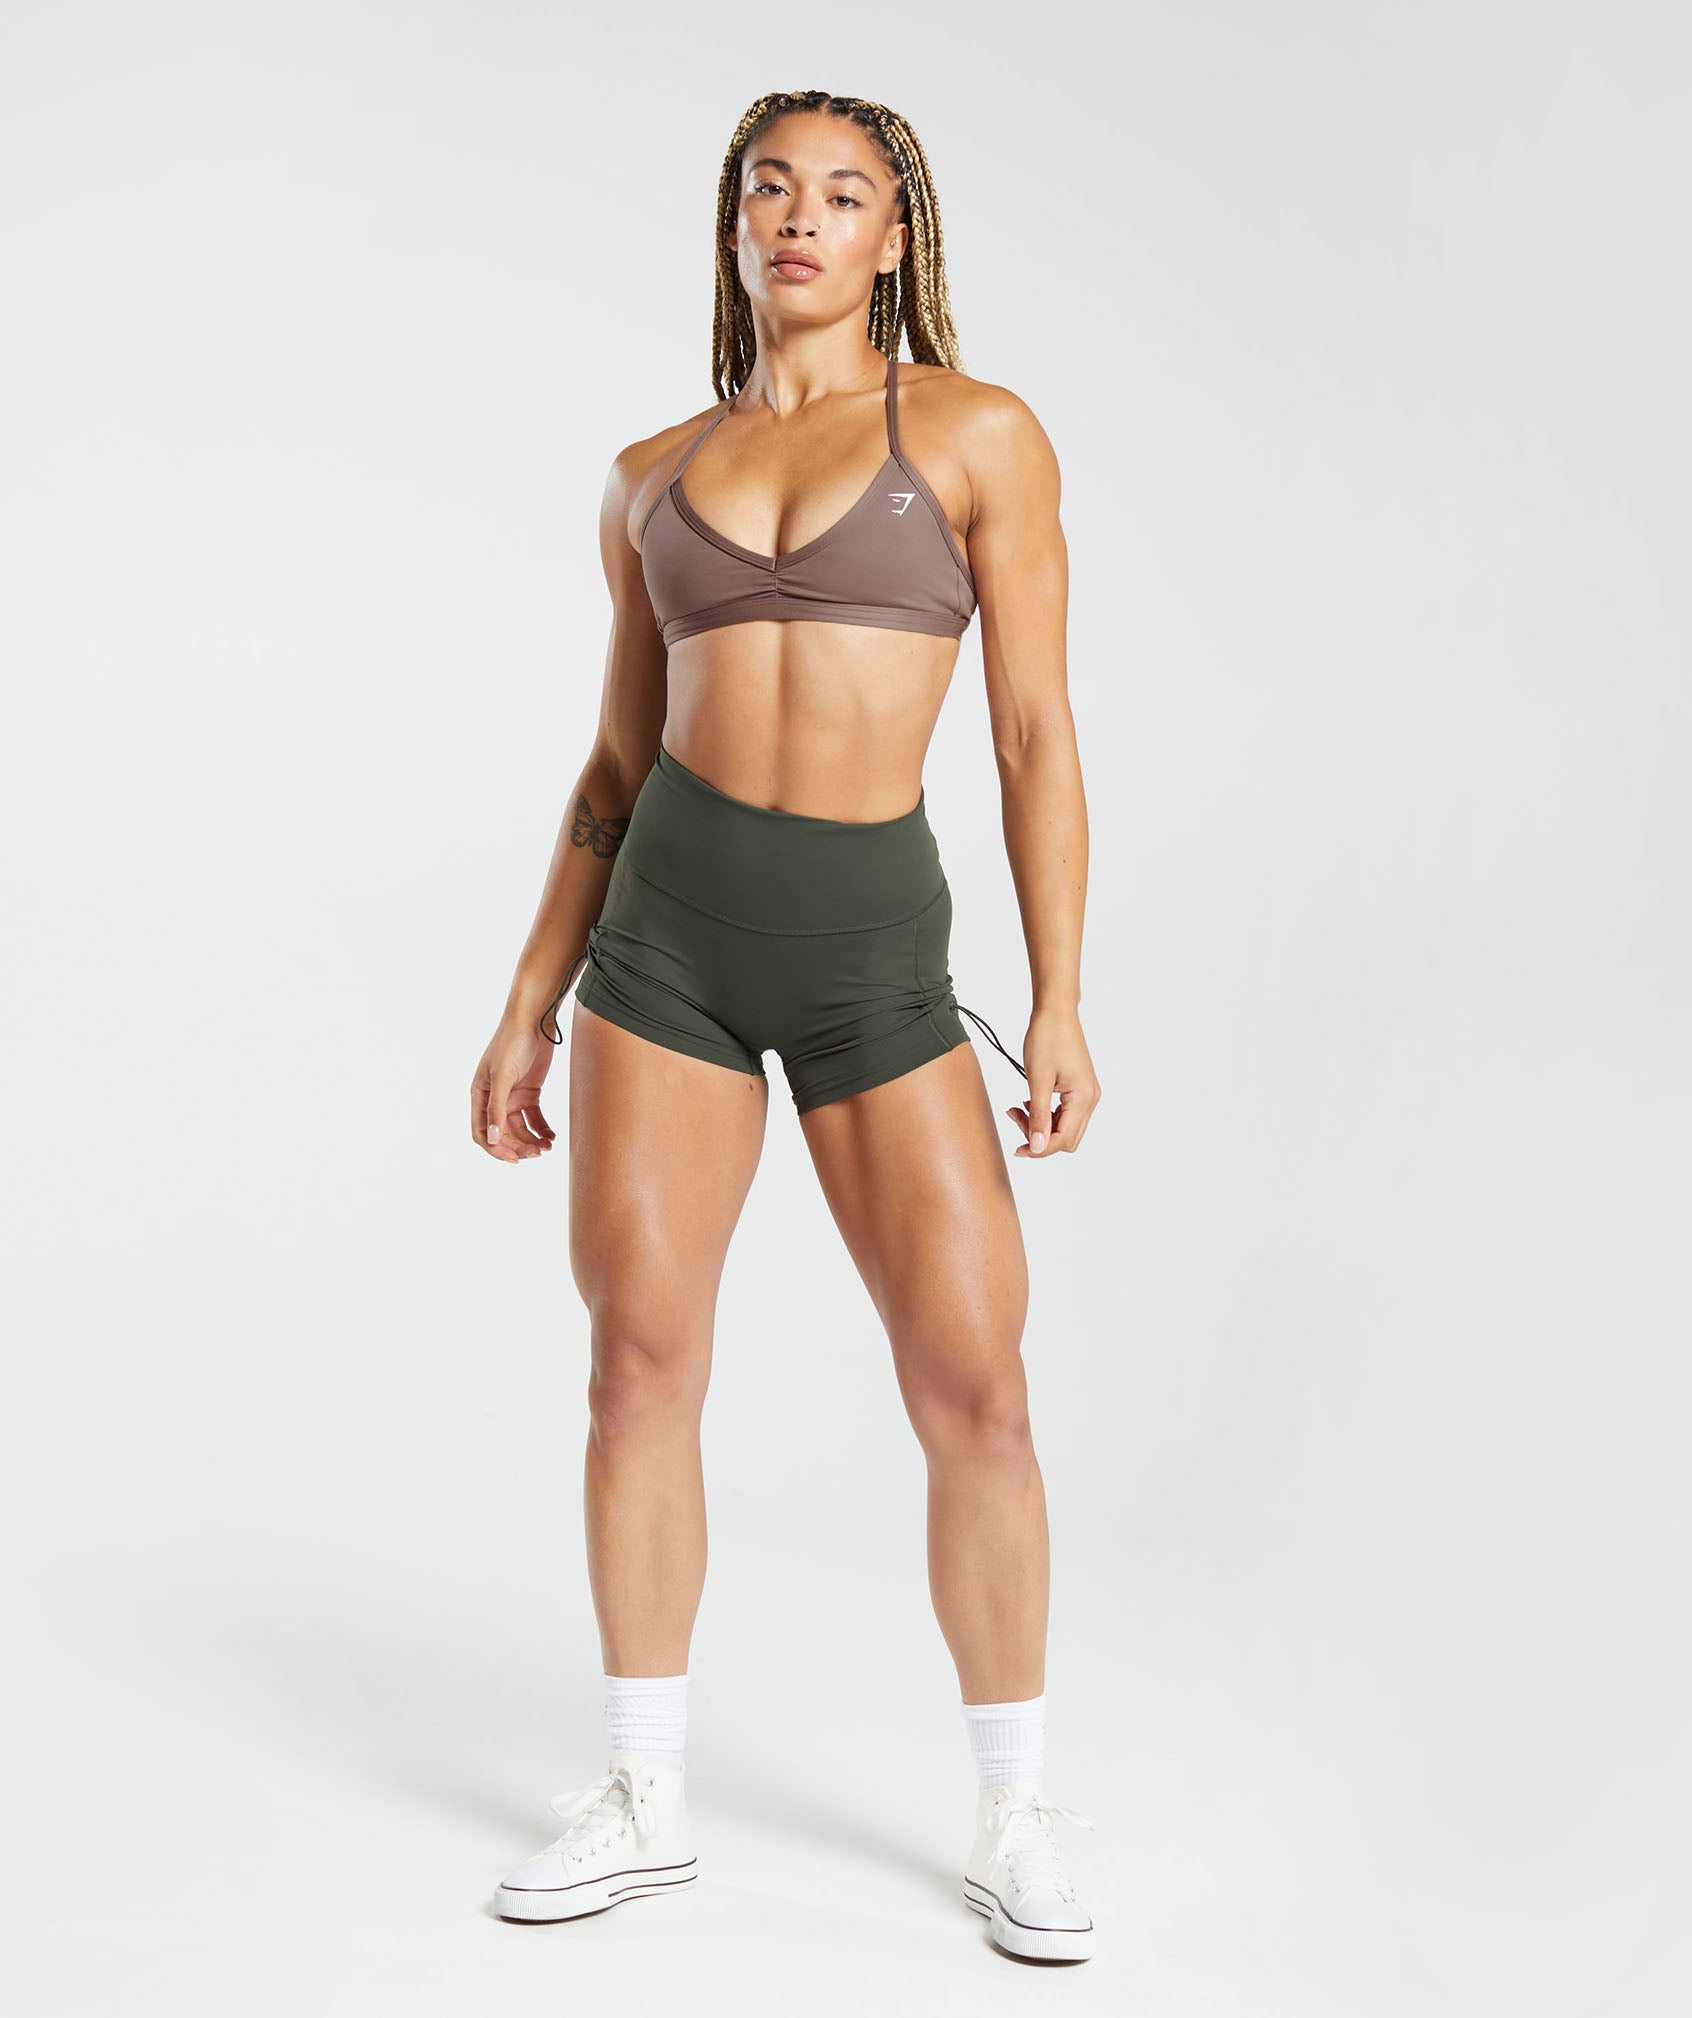 Gymshark Legacy Tight Shorts - Unit Green